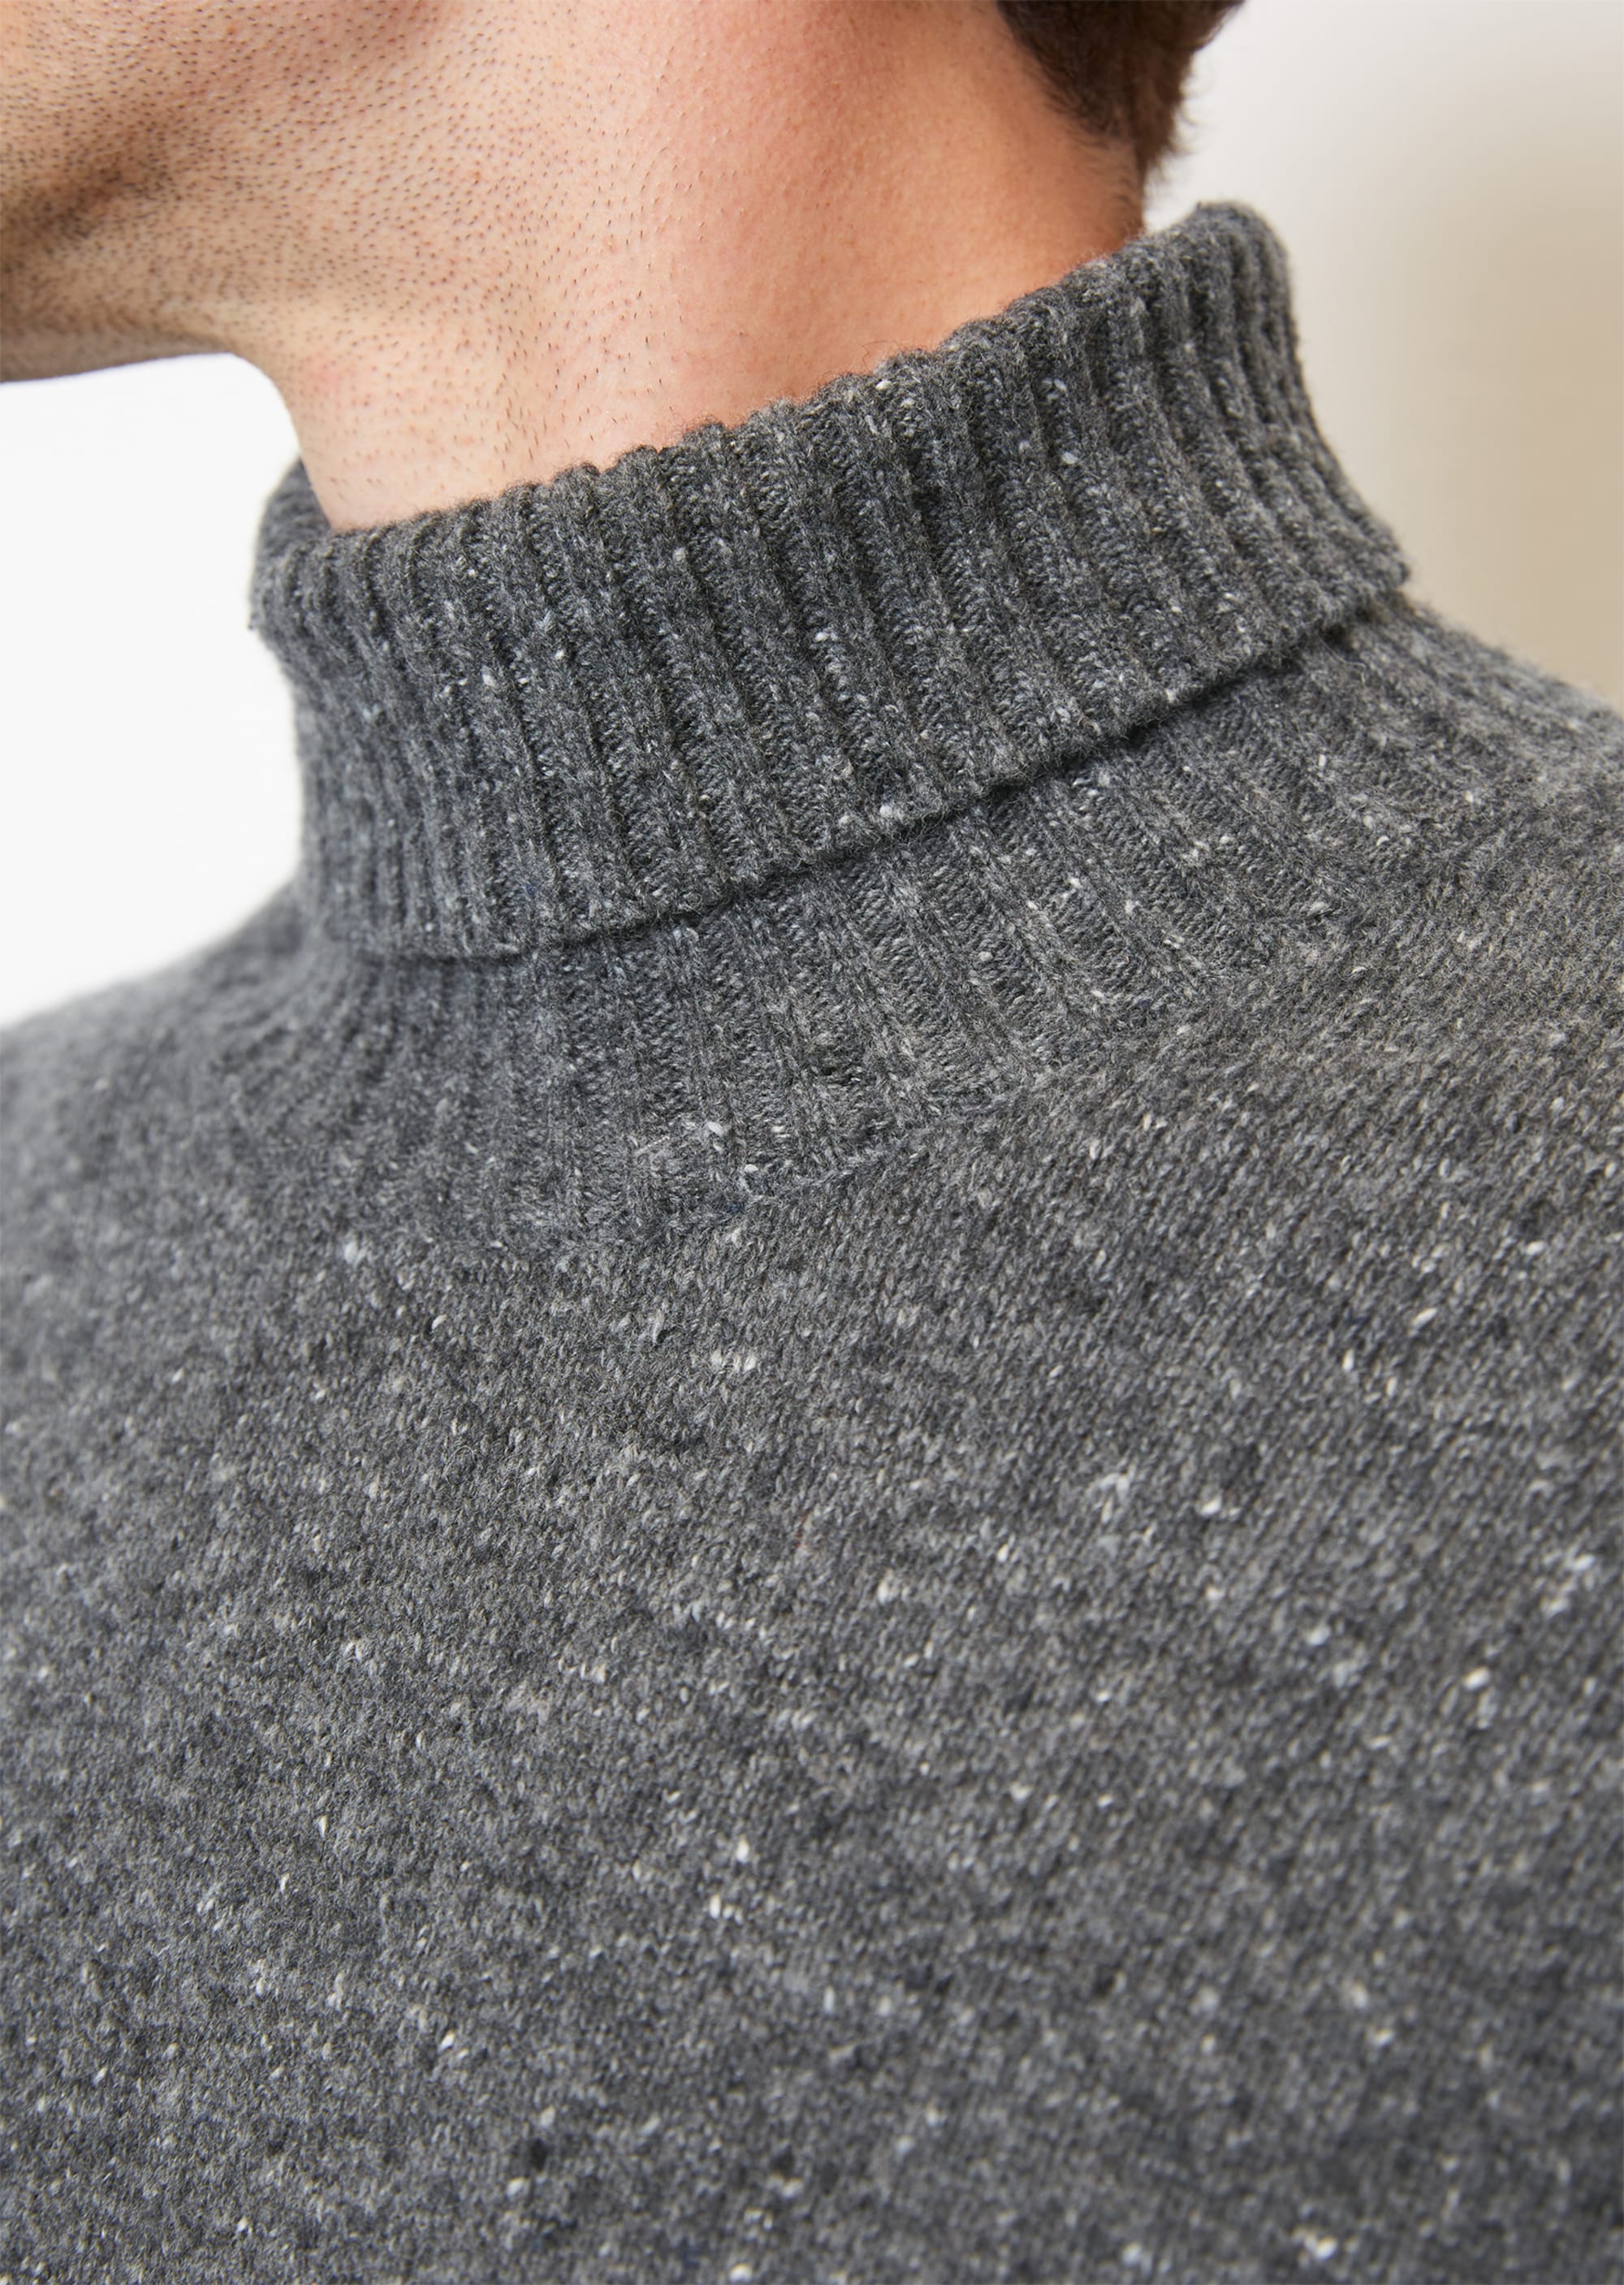 Turtleneck sweater regular from speckled tweed yarn